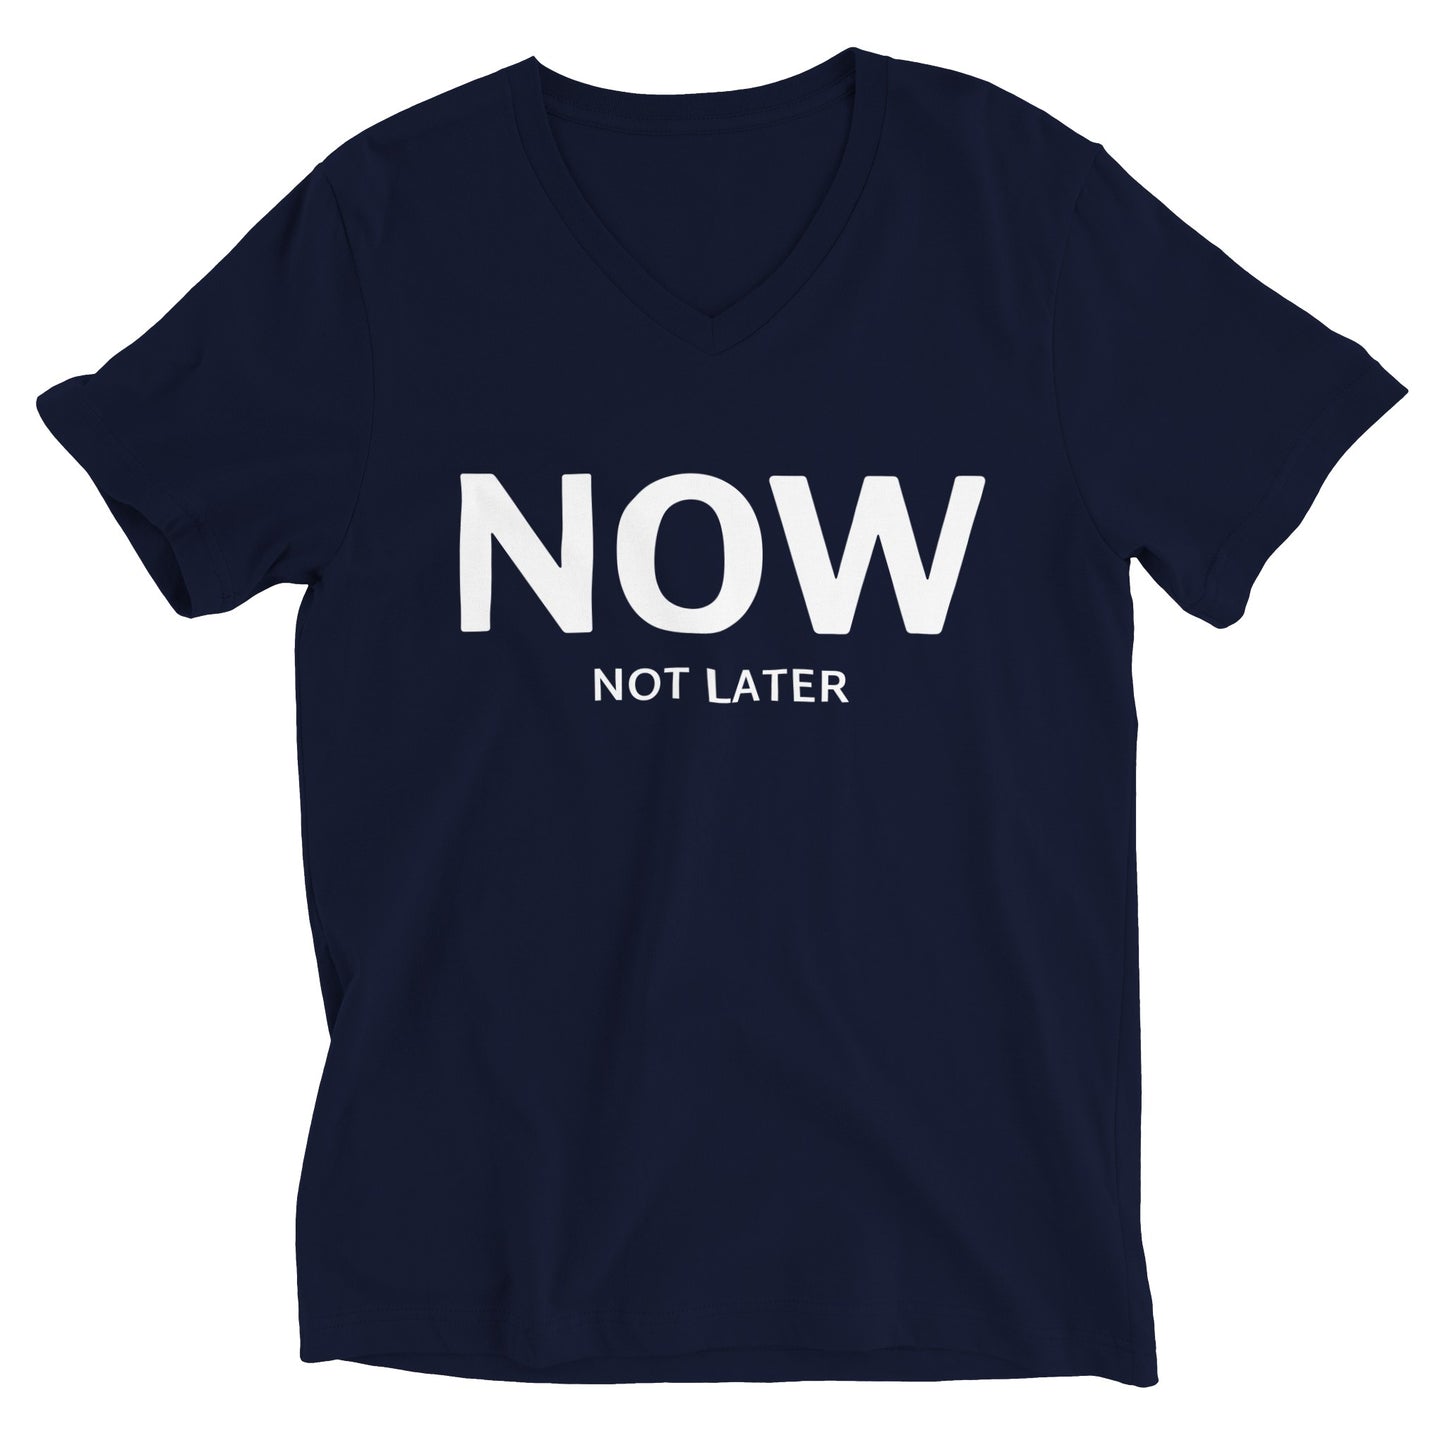 NOW - NOT NEVER. Unisex T-Shirt